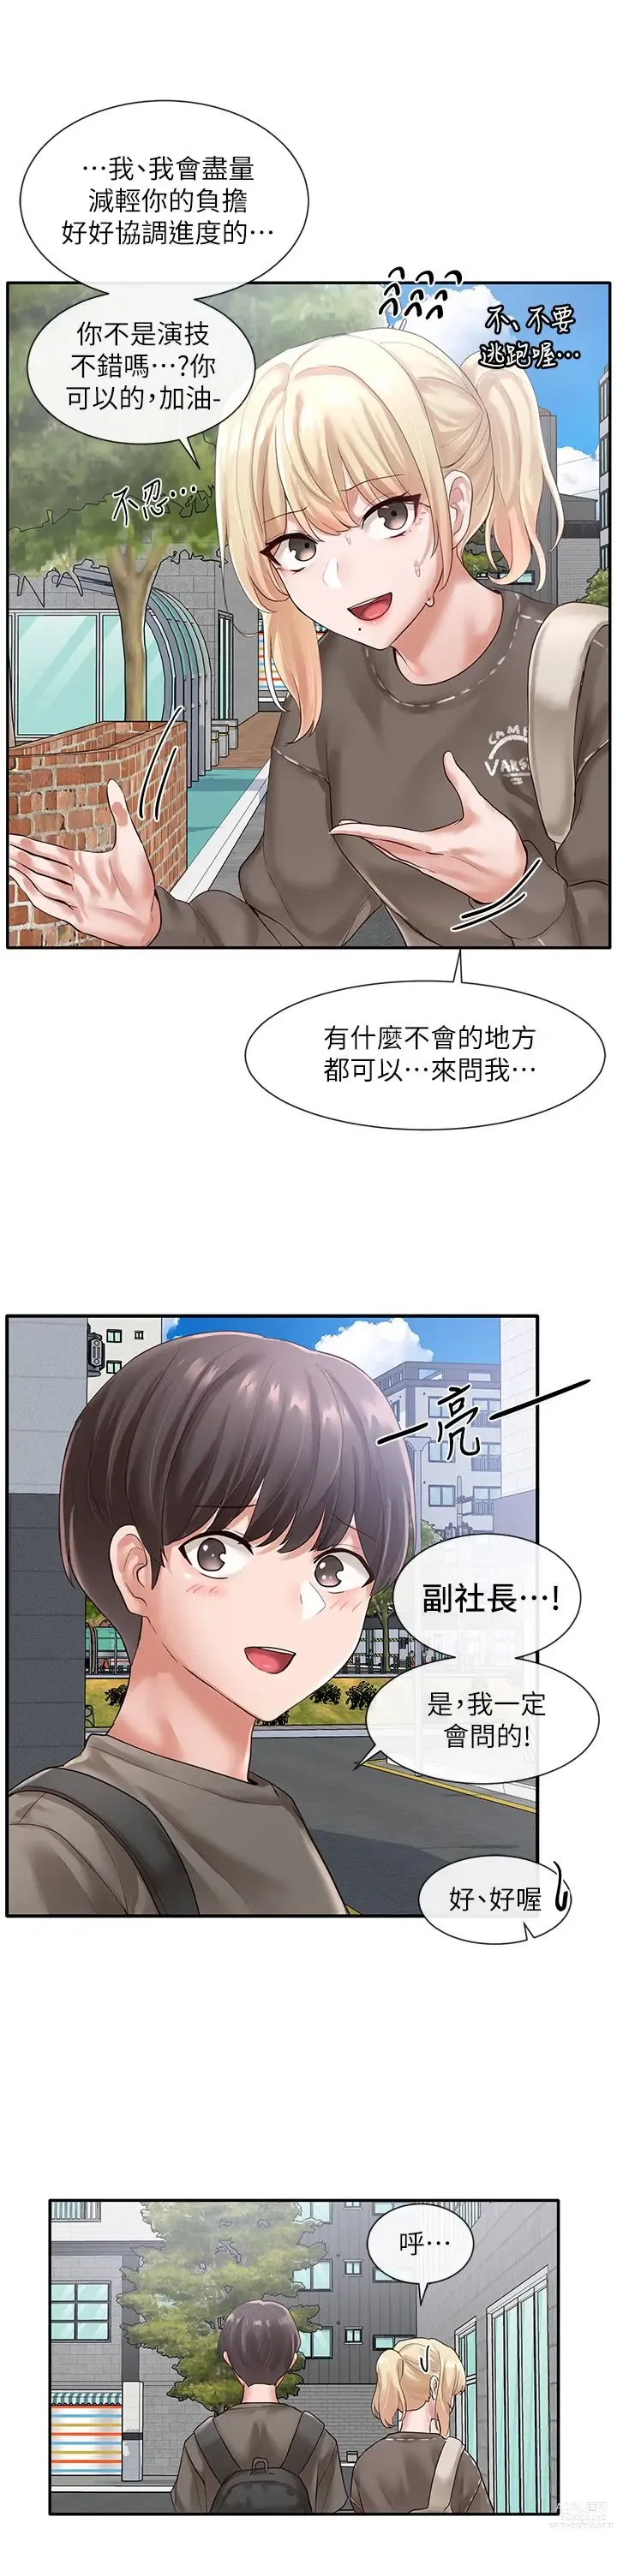 Page 2 of manga 社团学姐/Circles 51-100